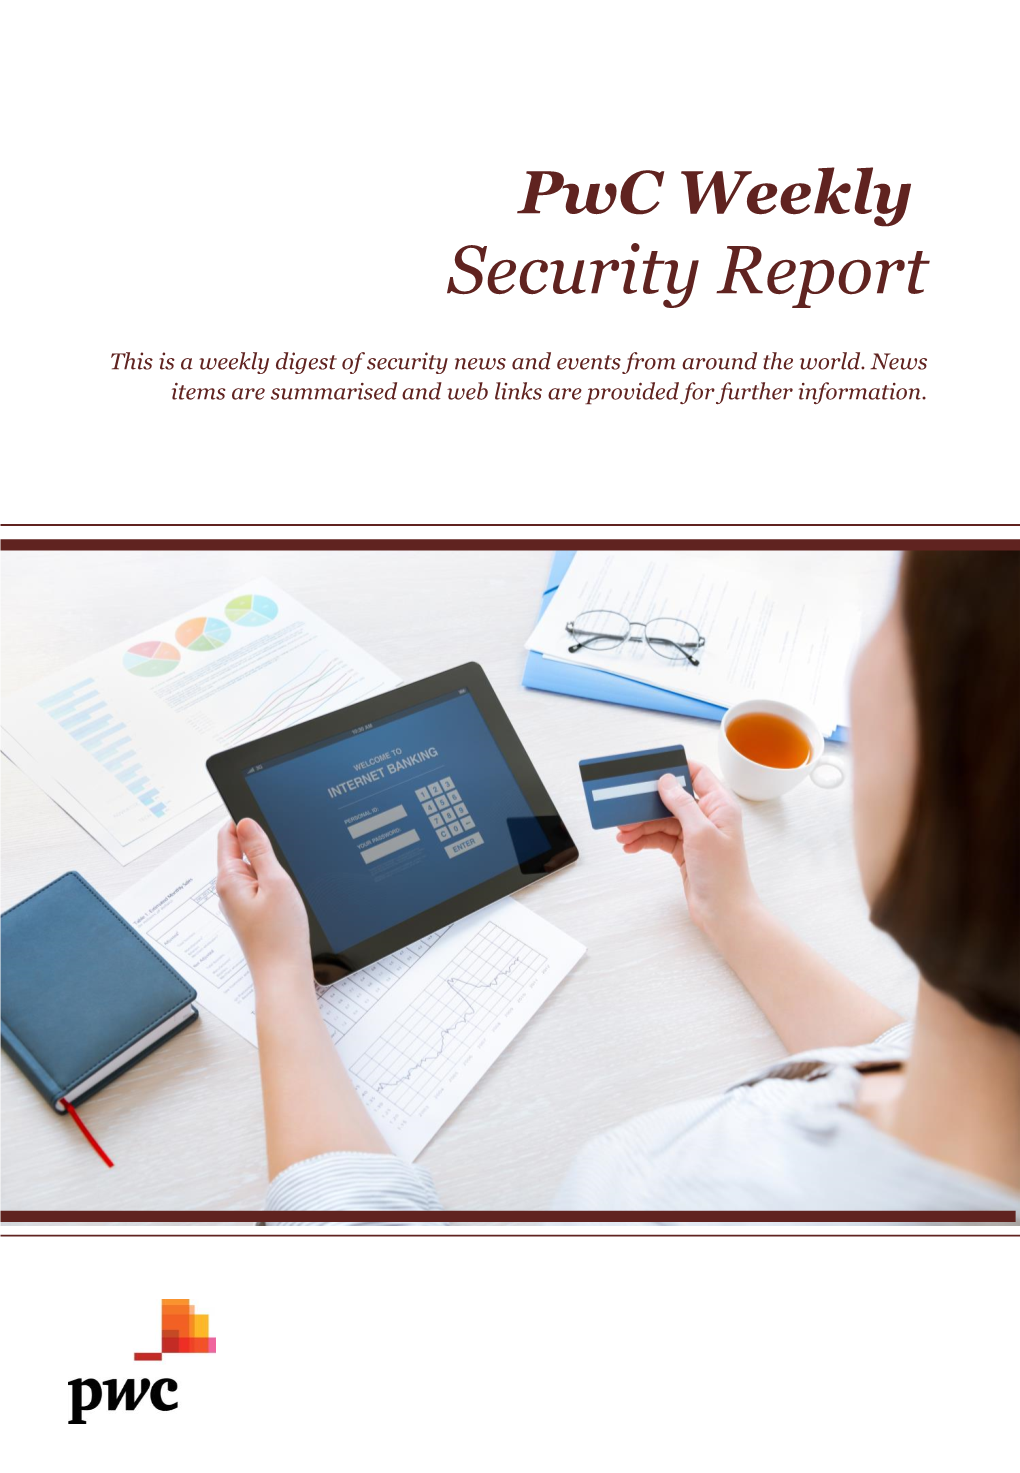 Security Report